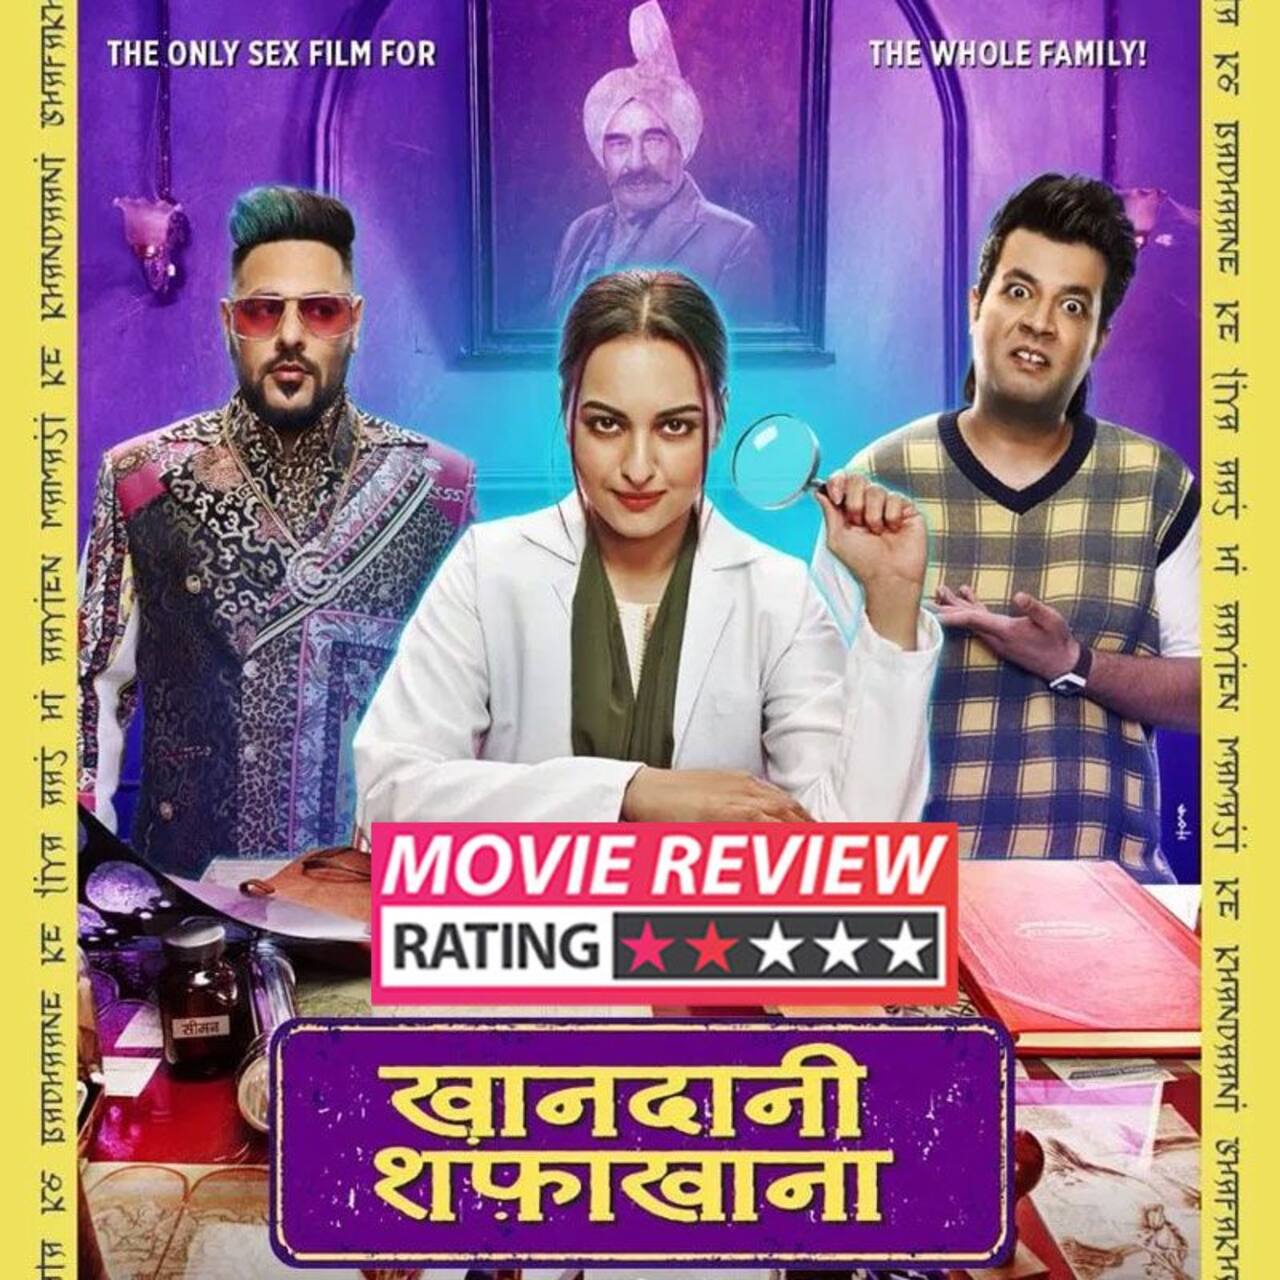 Khandaani Shafakhana Movie Review Sonakshi Sinhas Impressive Performance Is Undone By An